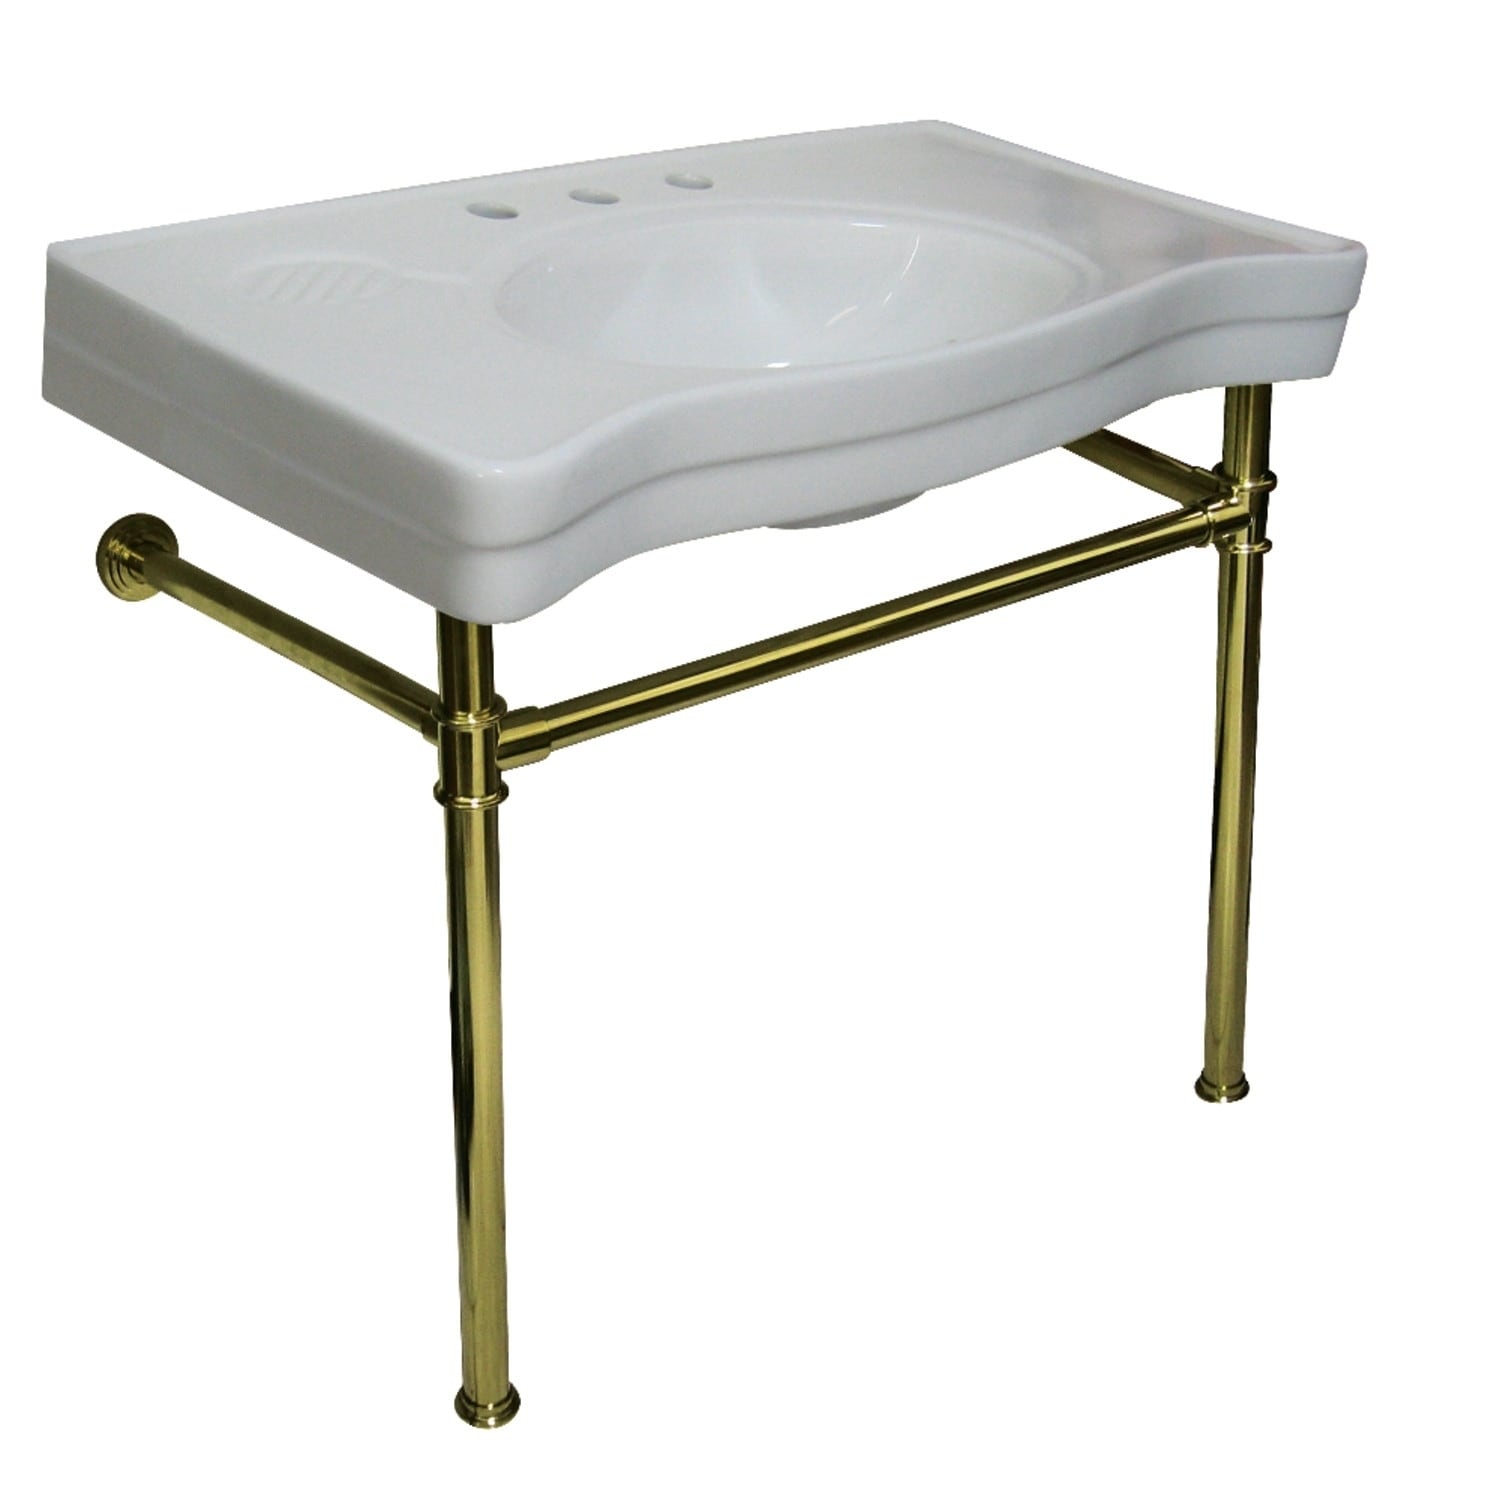 Imperial Vintage 36 Inch Pedestal Bathroom Sink Vanity In Polished Brass On Sale Overstock 25429269